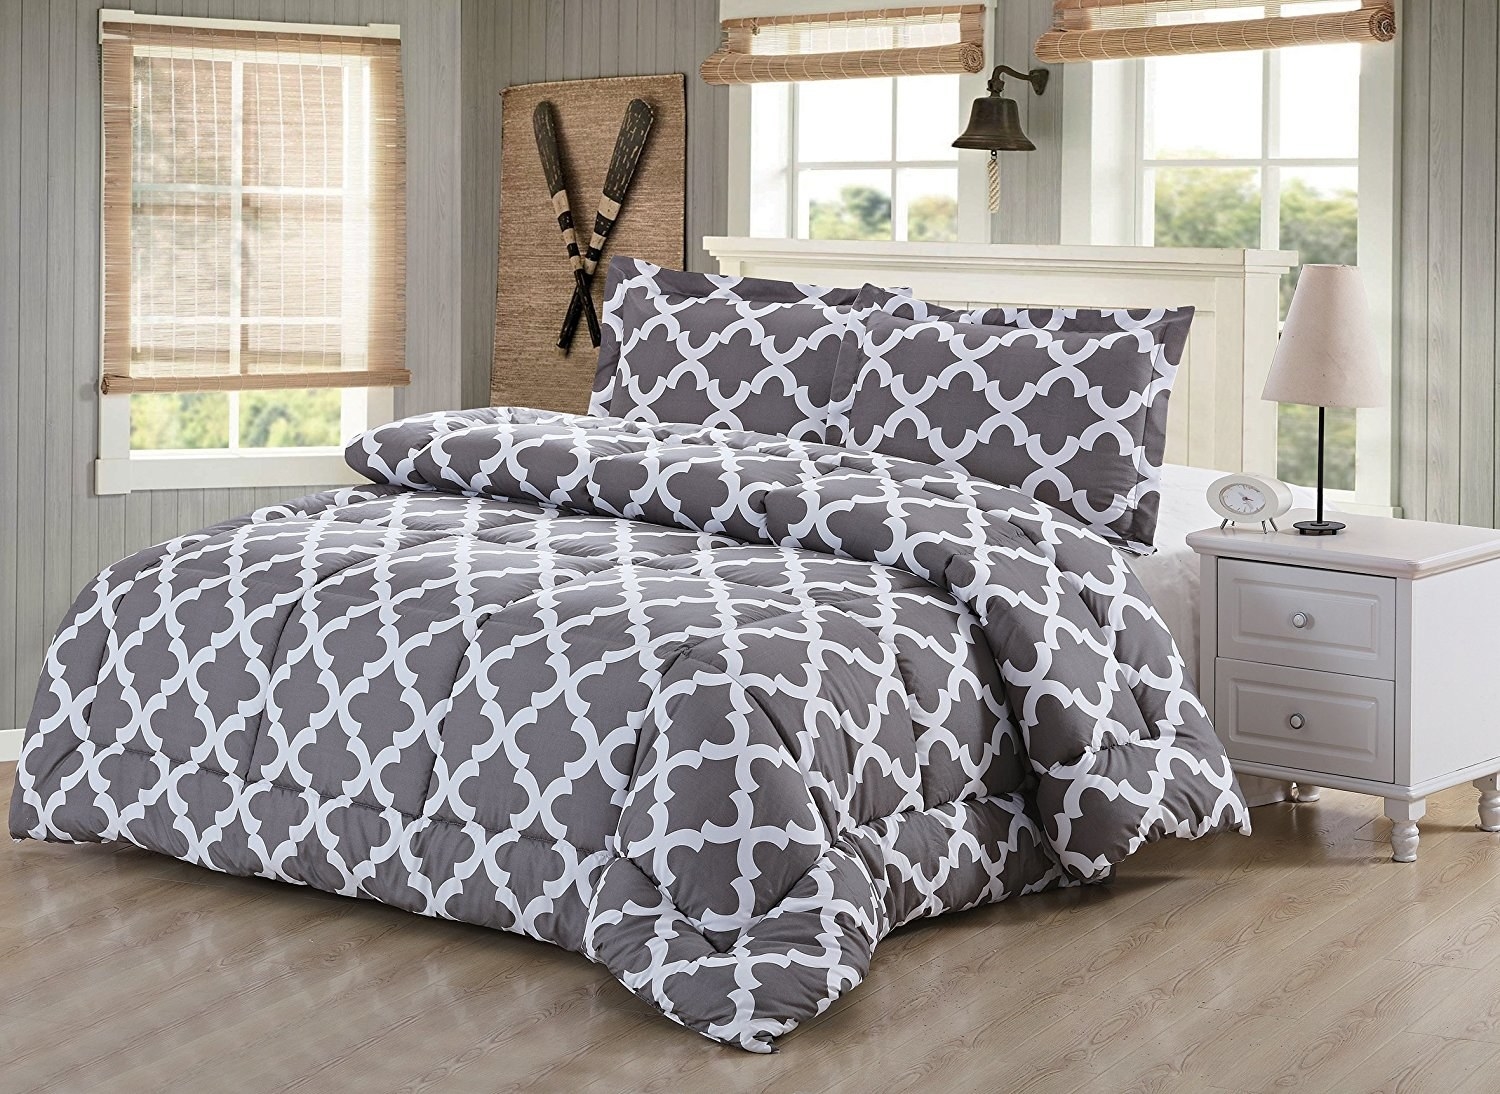 Patterned comforter on mattress in bedroom